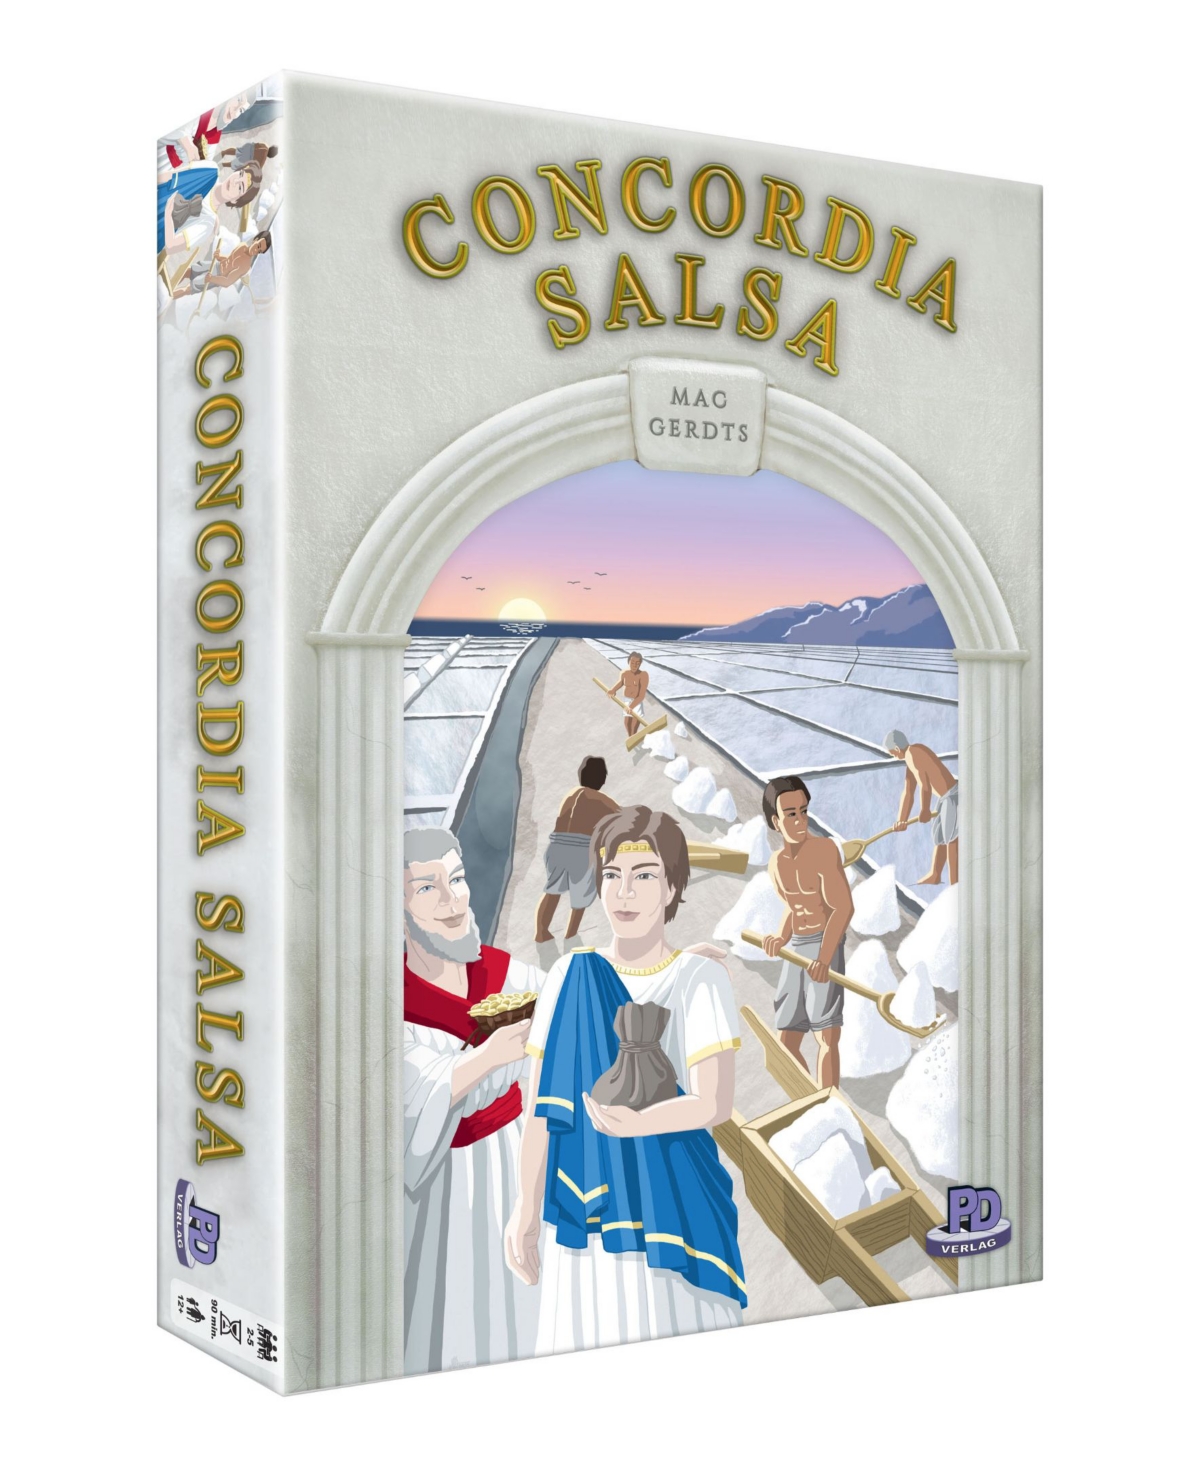 UPC 655132005272 product image for Rio Grande Concordia Salsa Board Game Expansion Set, 29 Pieces | upcitemdb.com